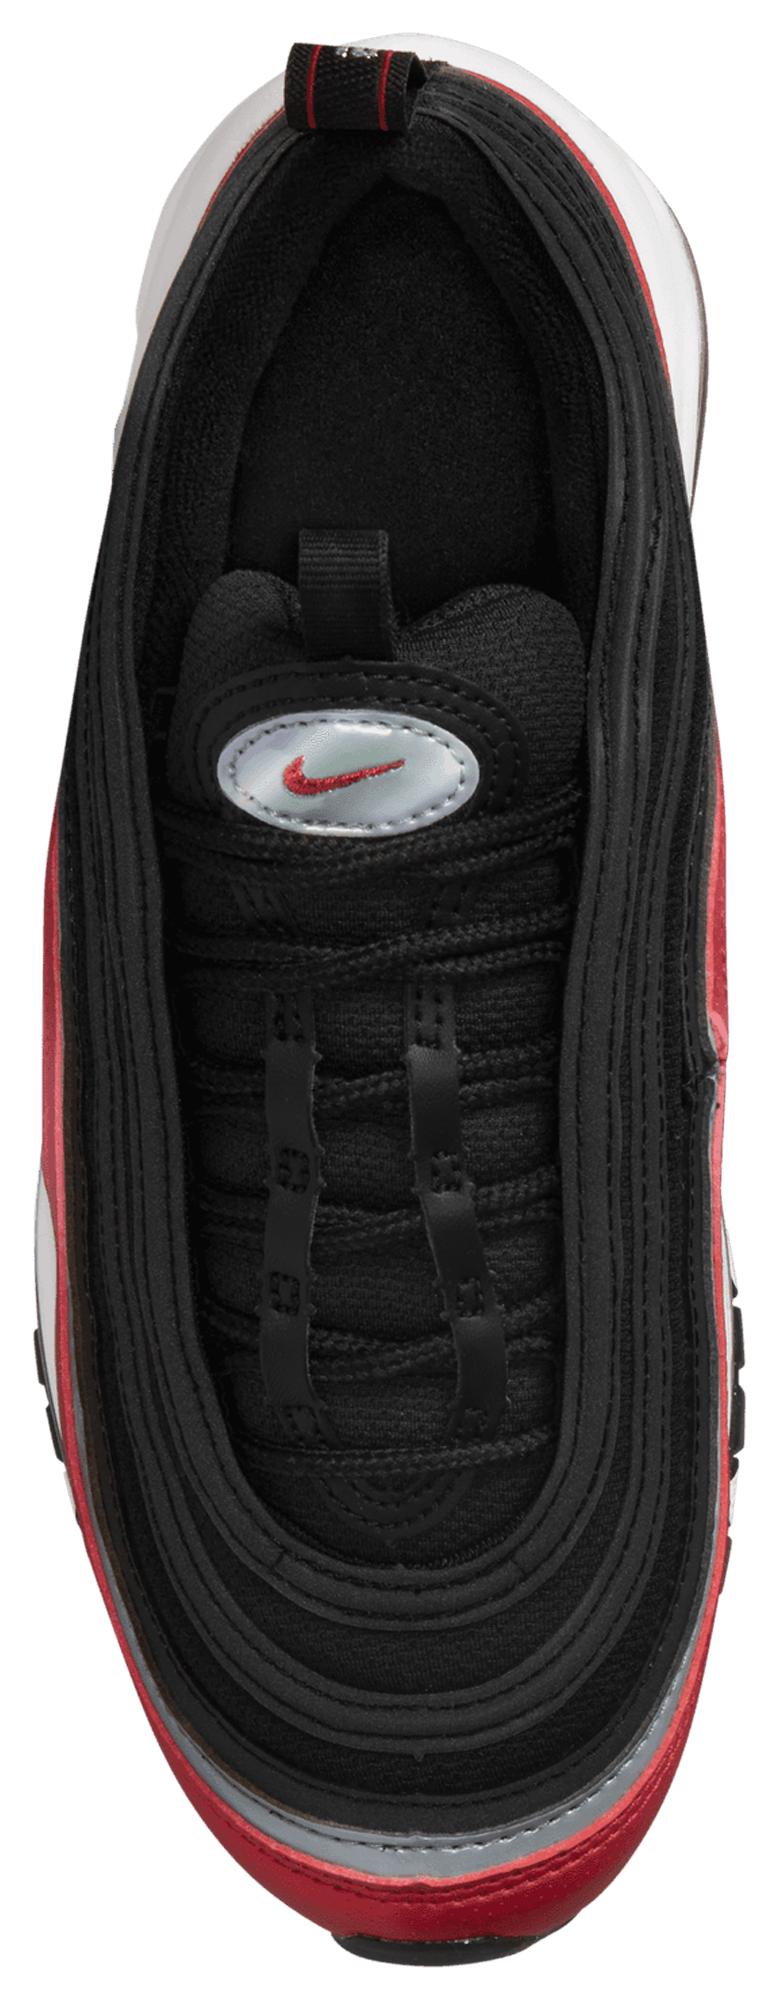 Nike Air Max 97 SE